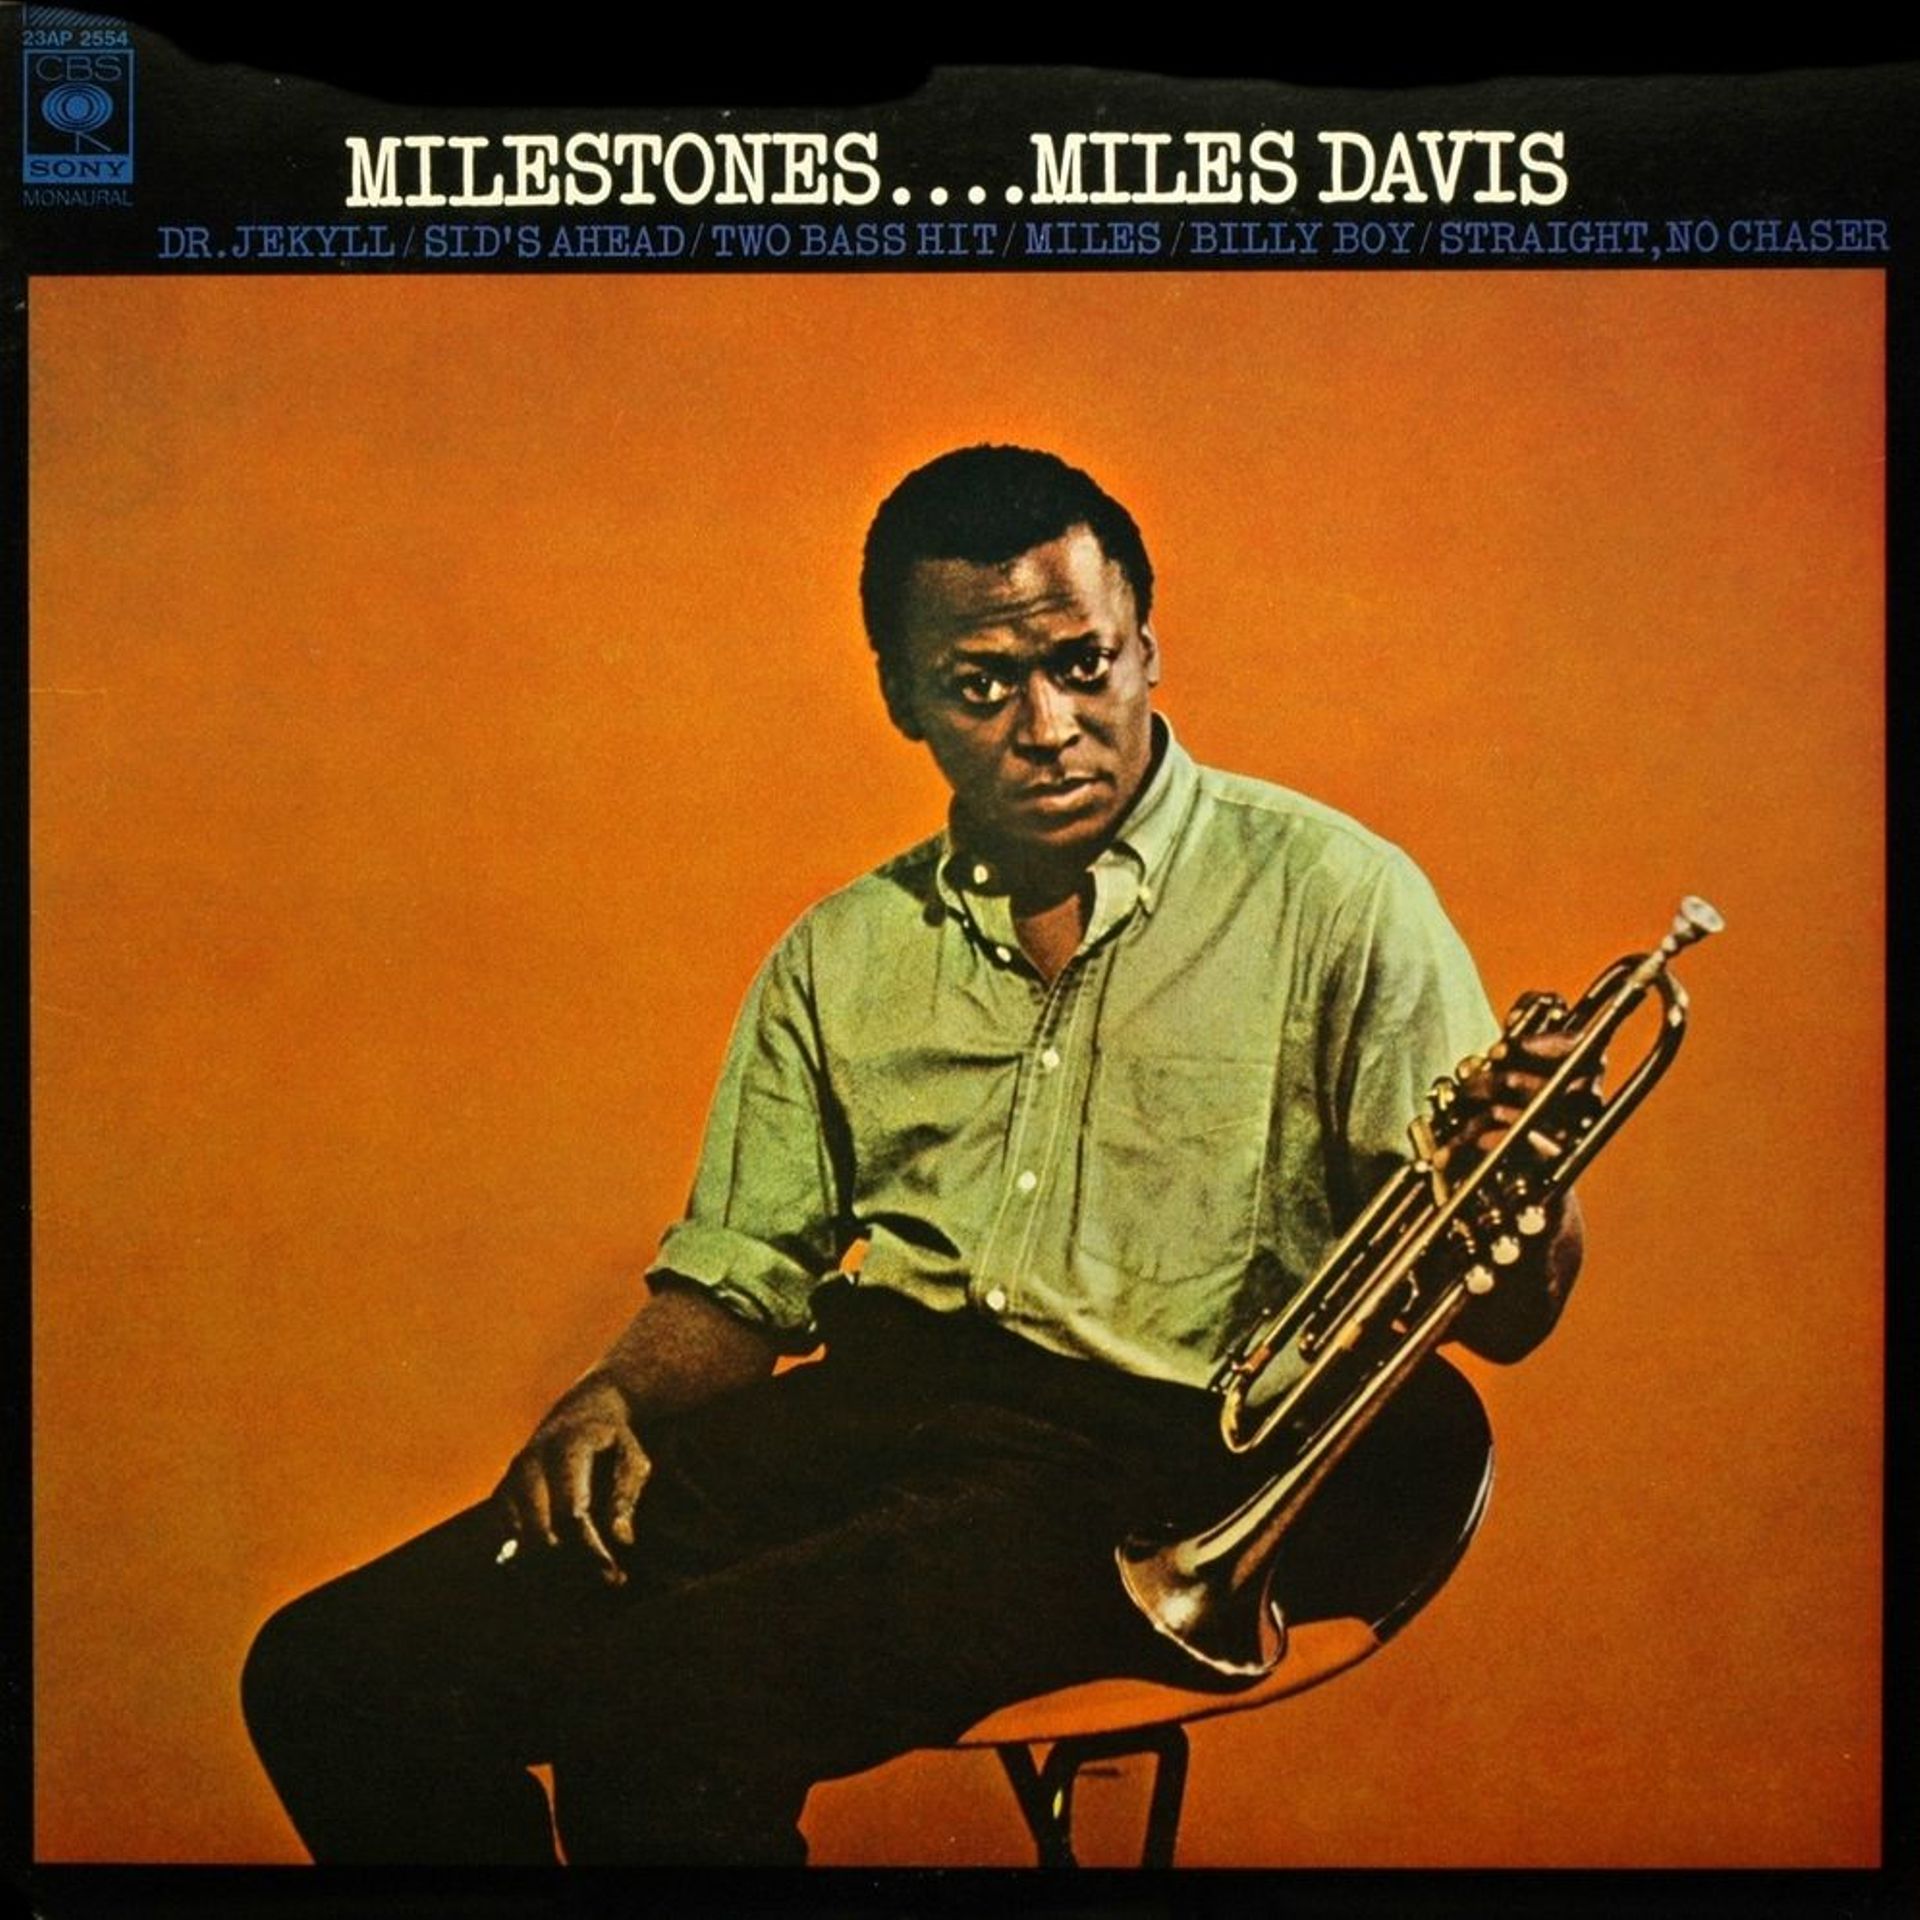 Miles Davis : "Milestones" (1958)